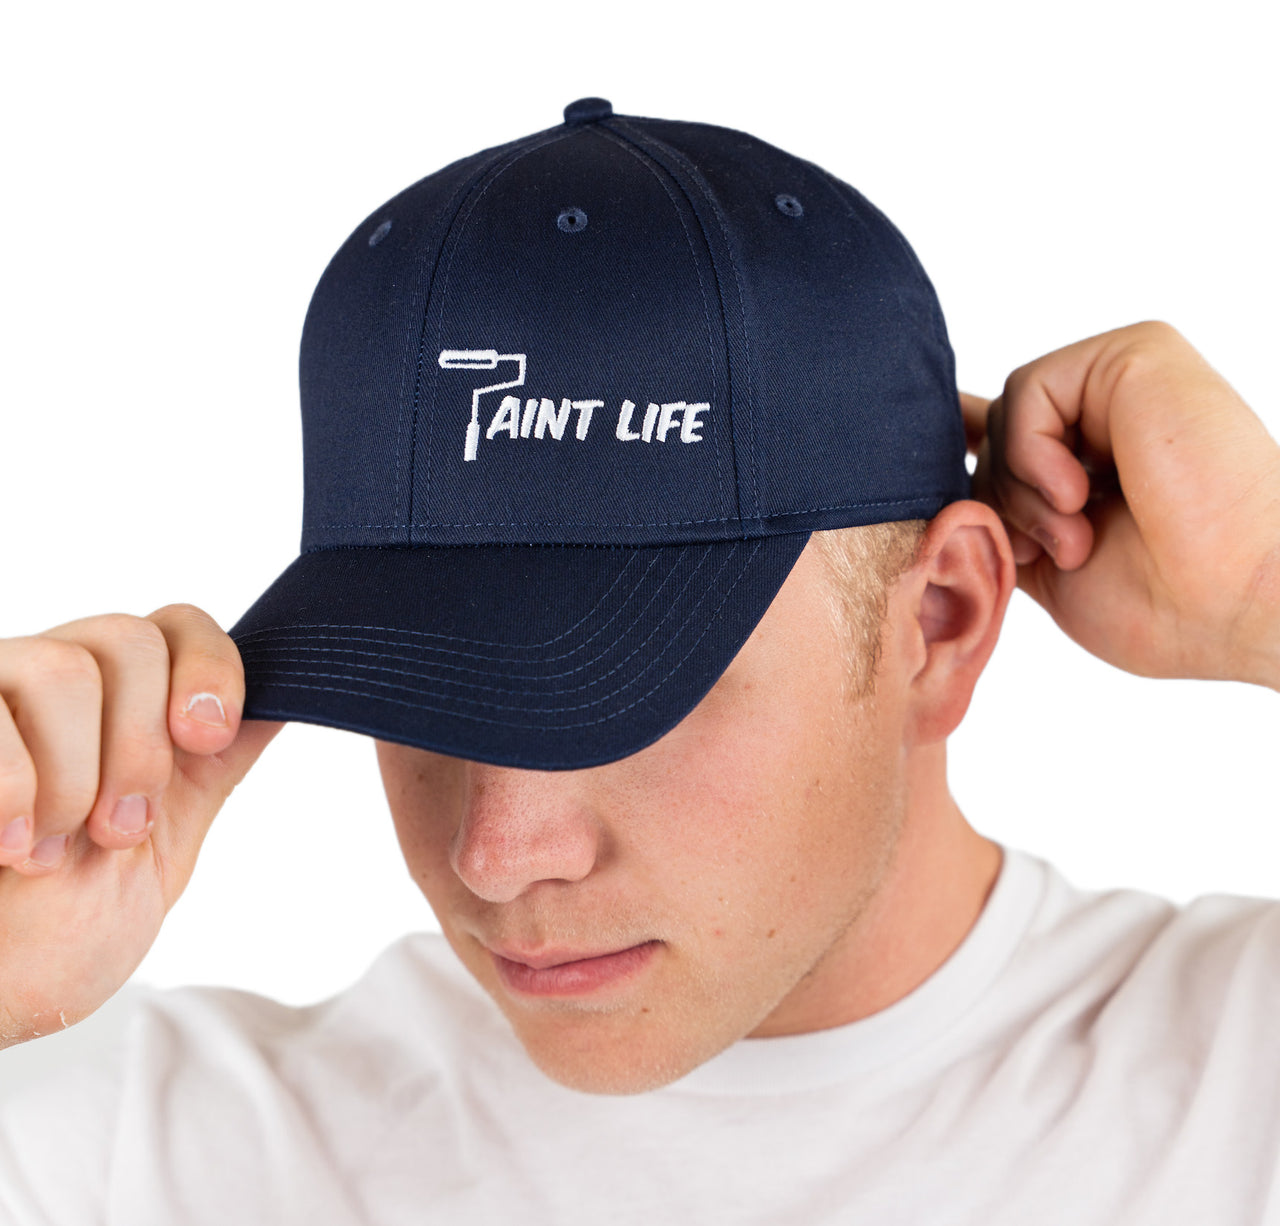 Paint Life Hat (snap back)